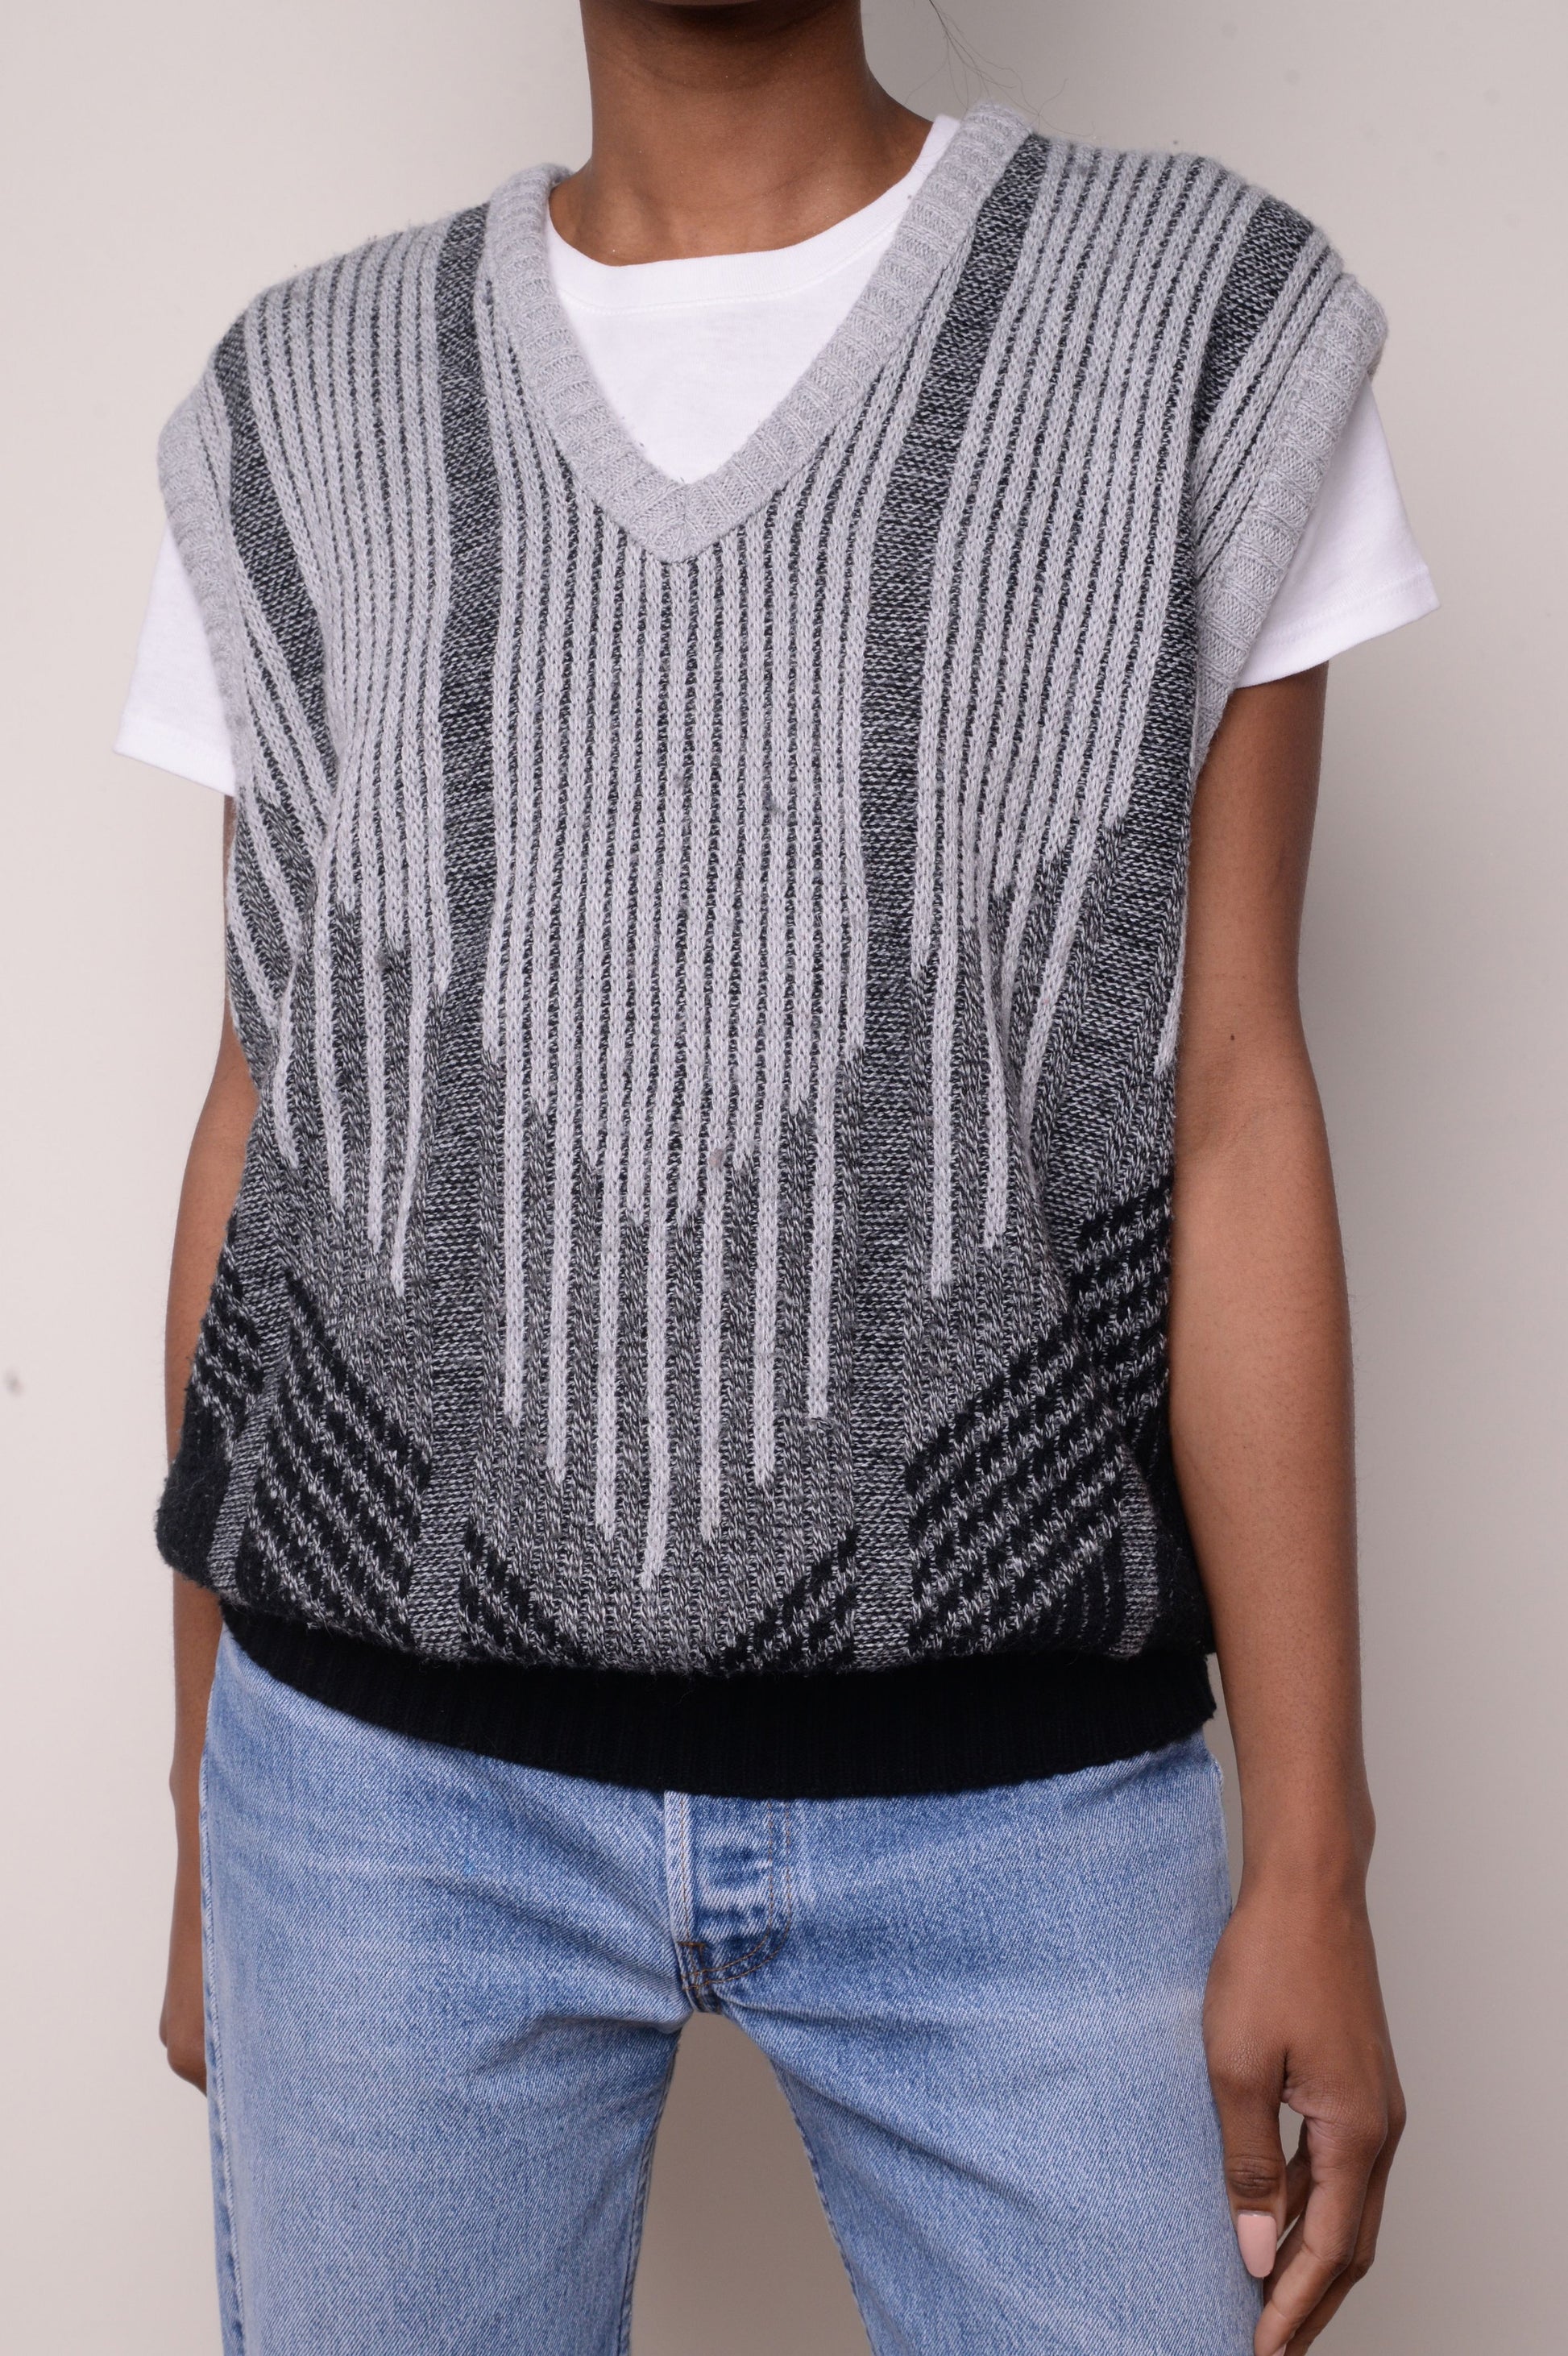 Geometric Grayscale Sweater Vest